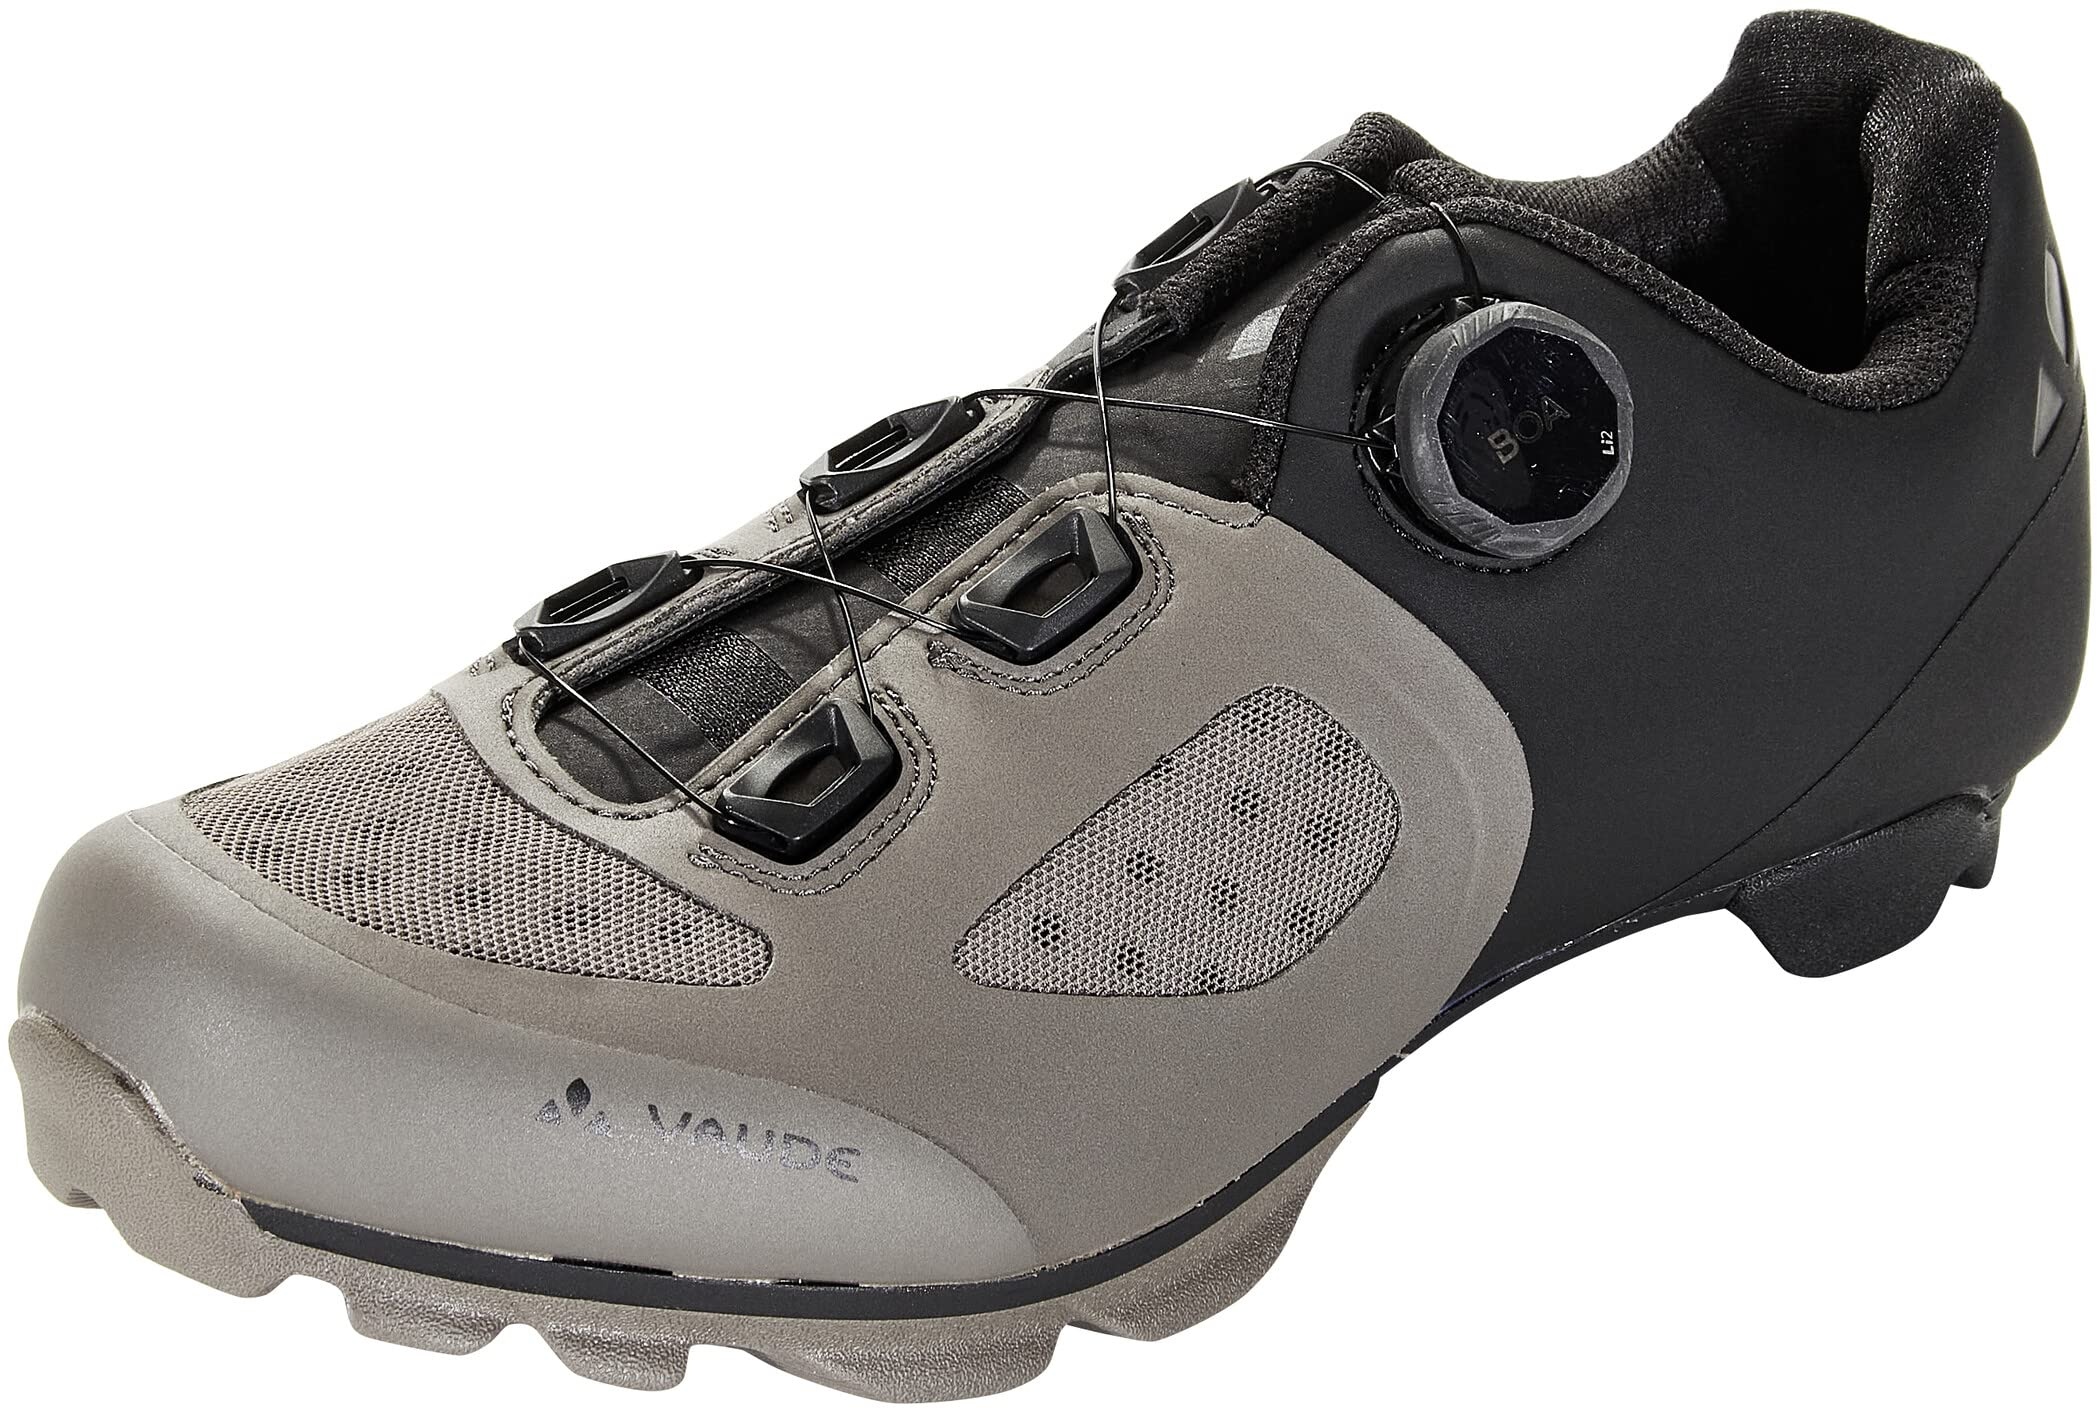 Bild MTB Kuro Tech Mountainbiking-Schuh, Black/Coconut, 40